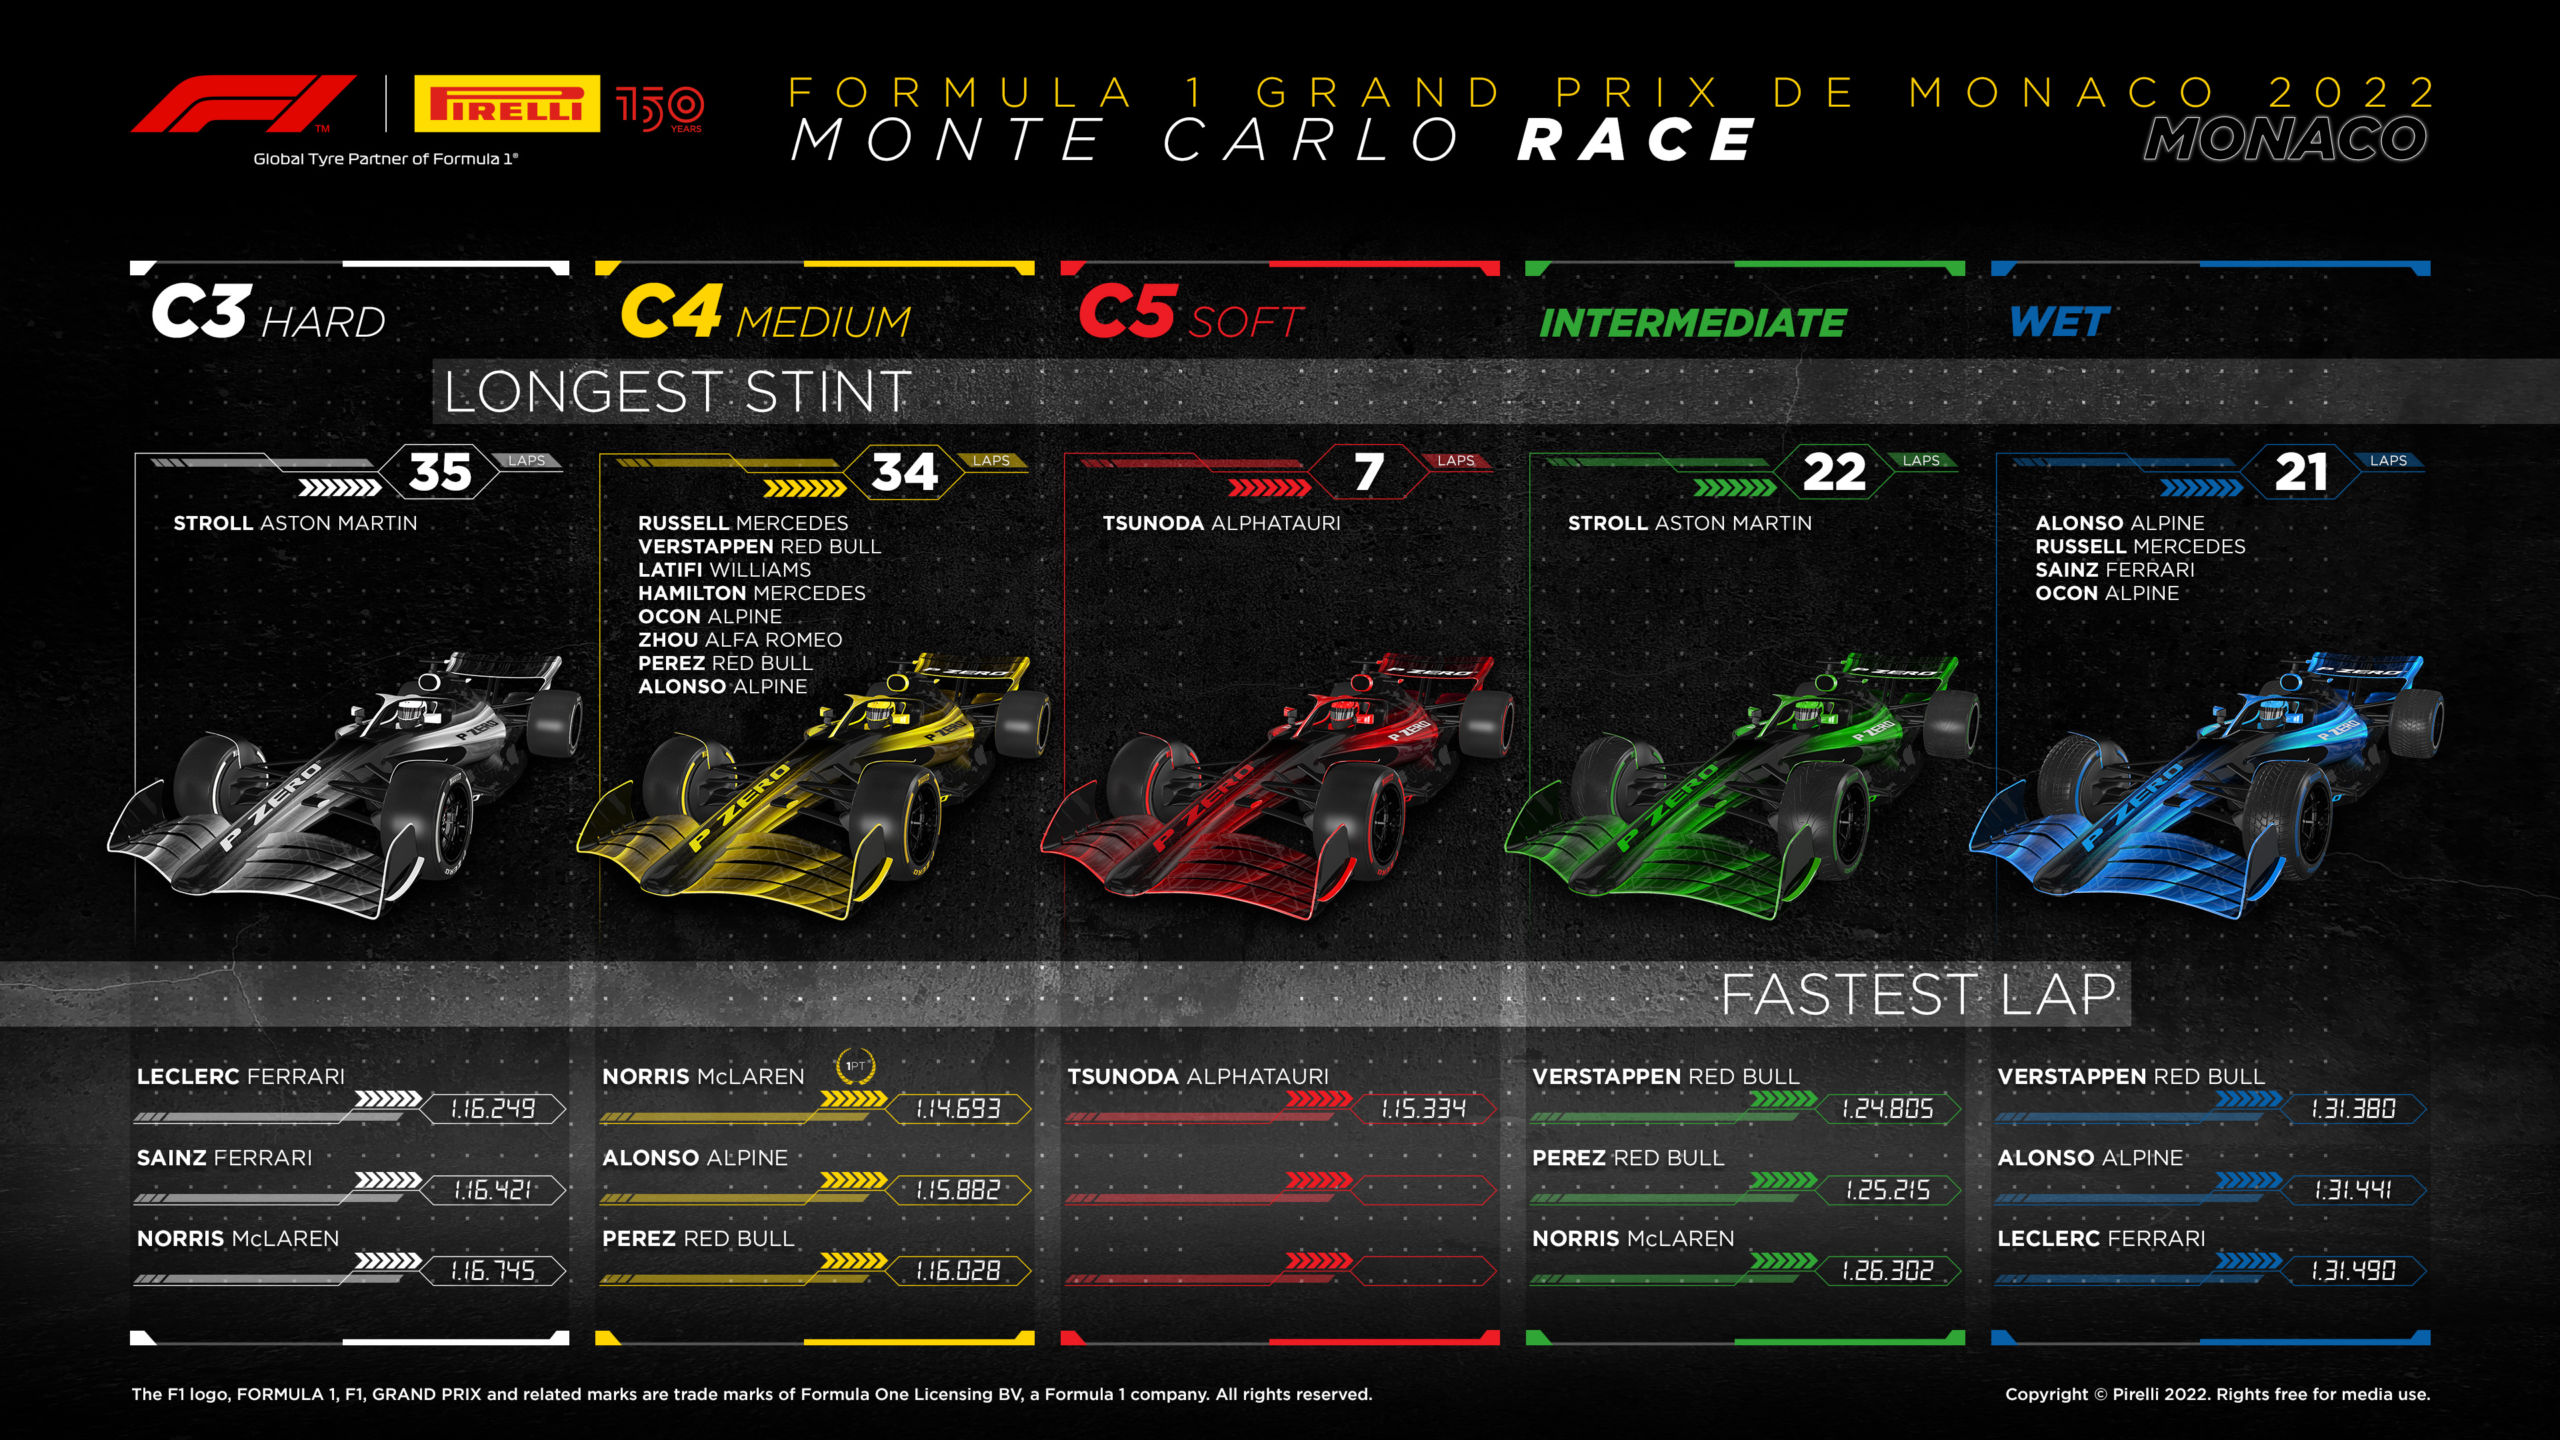 2022 Monaco Grand Prix Tyre Performance Analysis